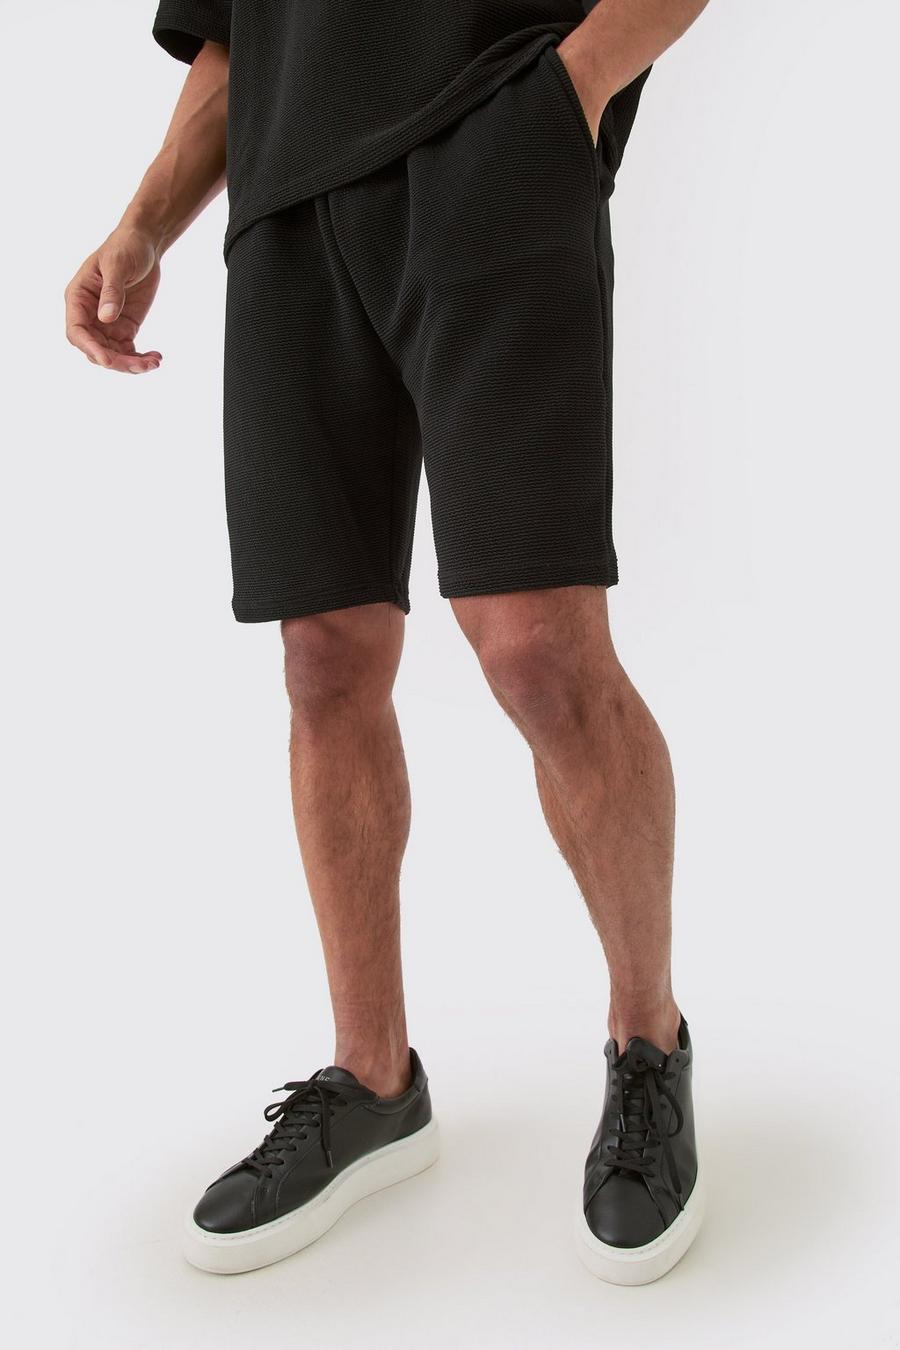 Pantalón corto holgado texturizado de largo medio, Black